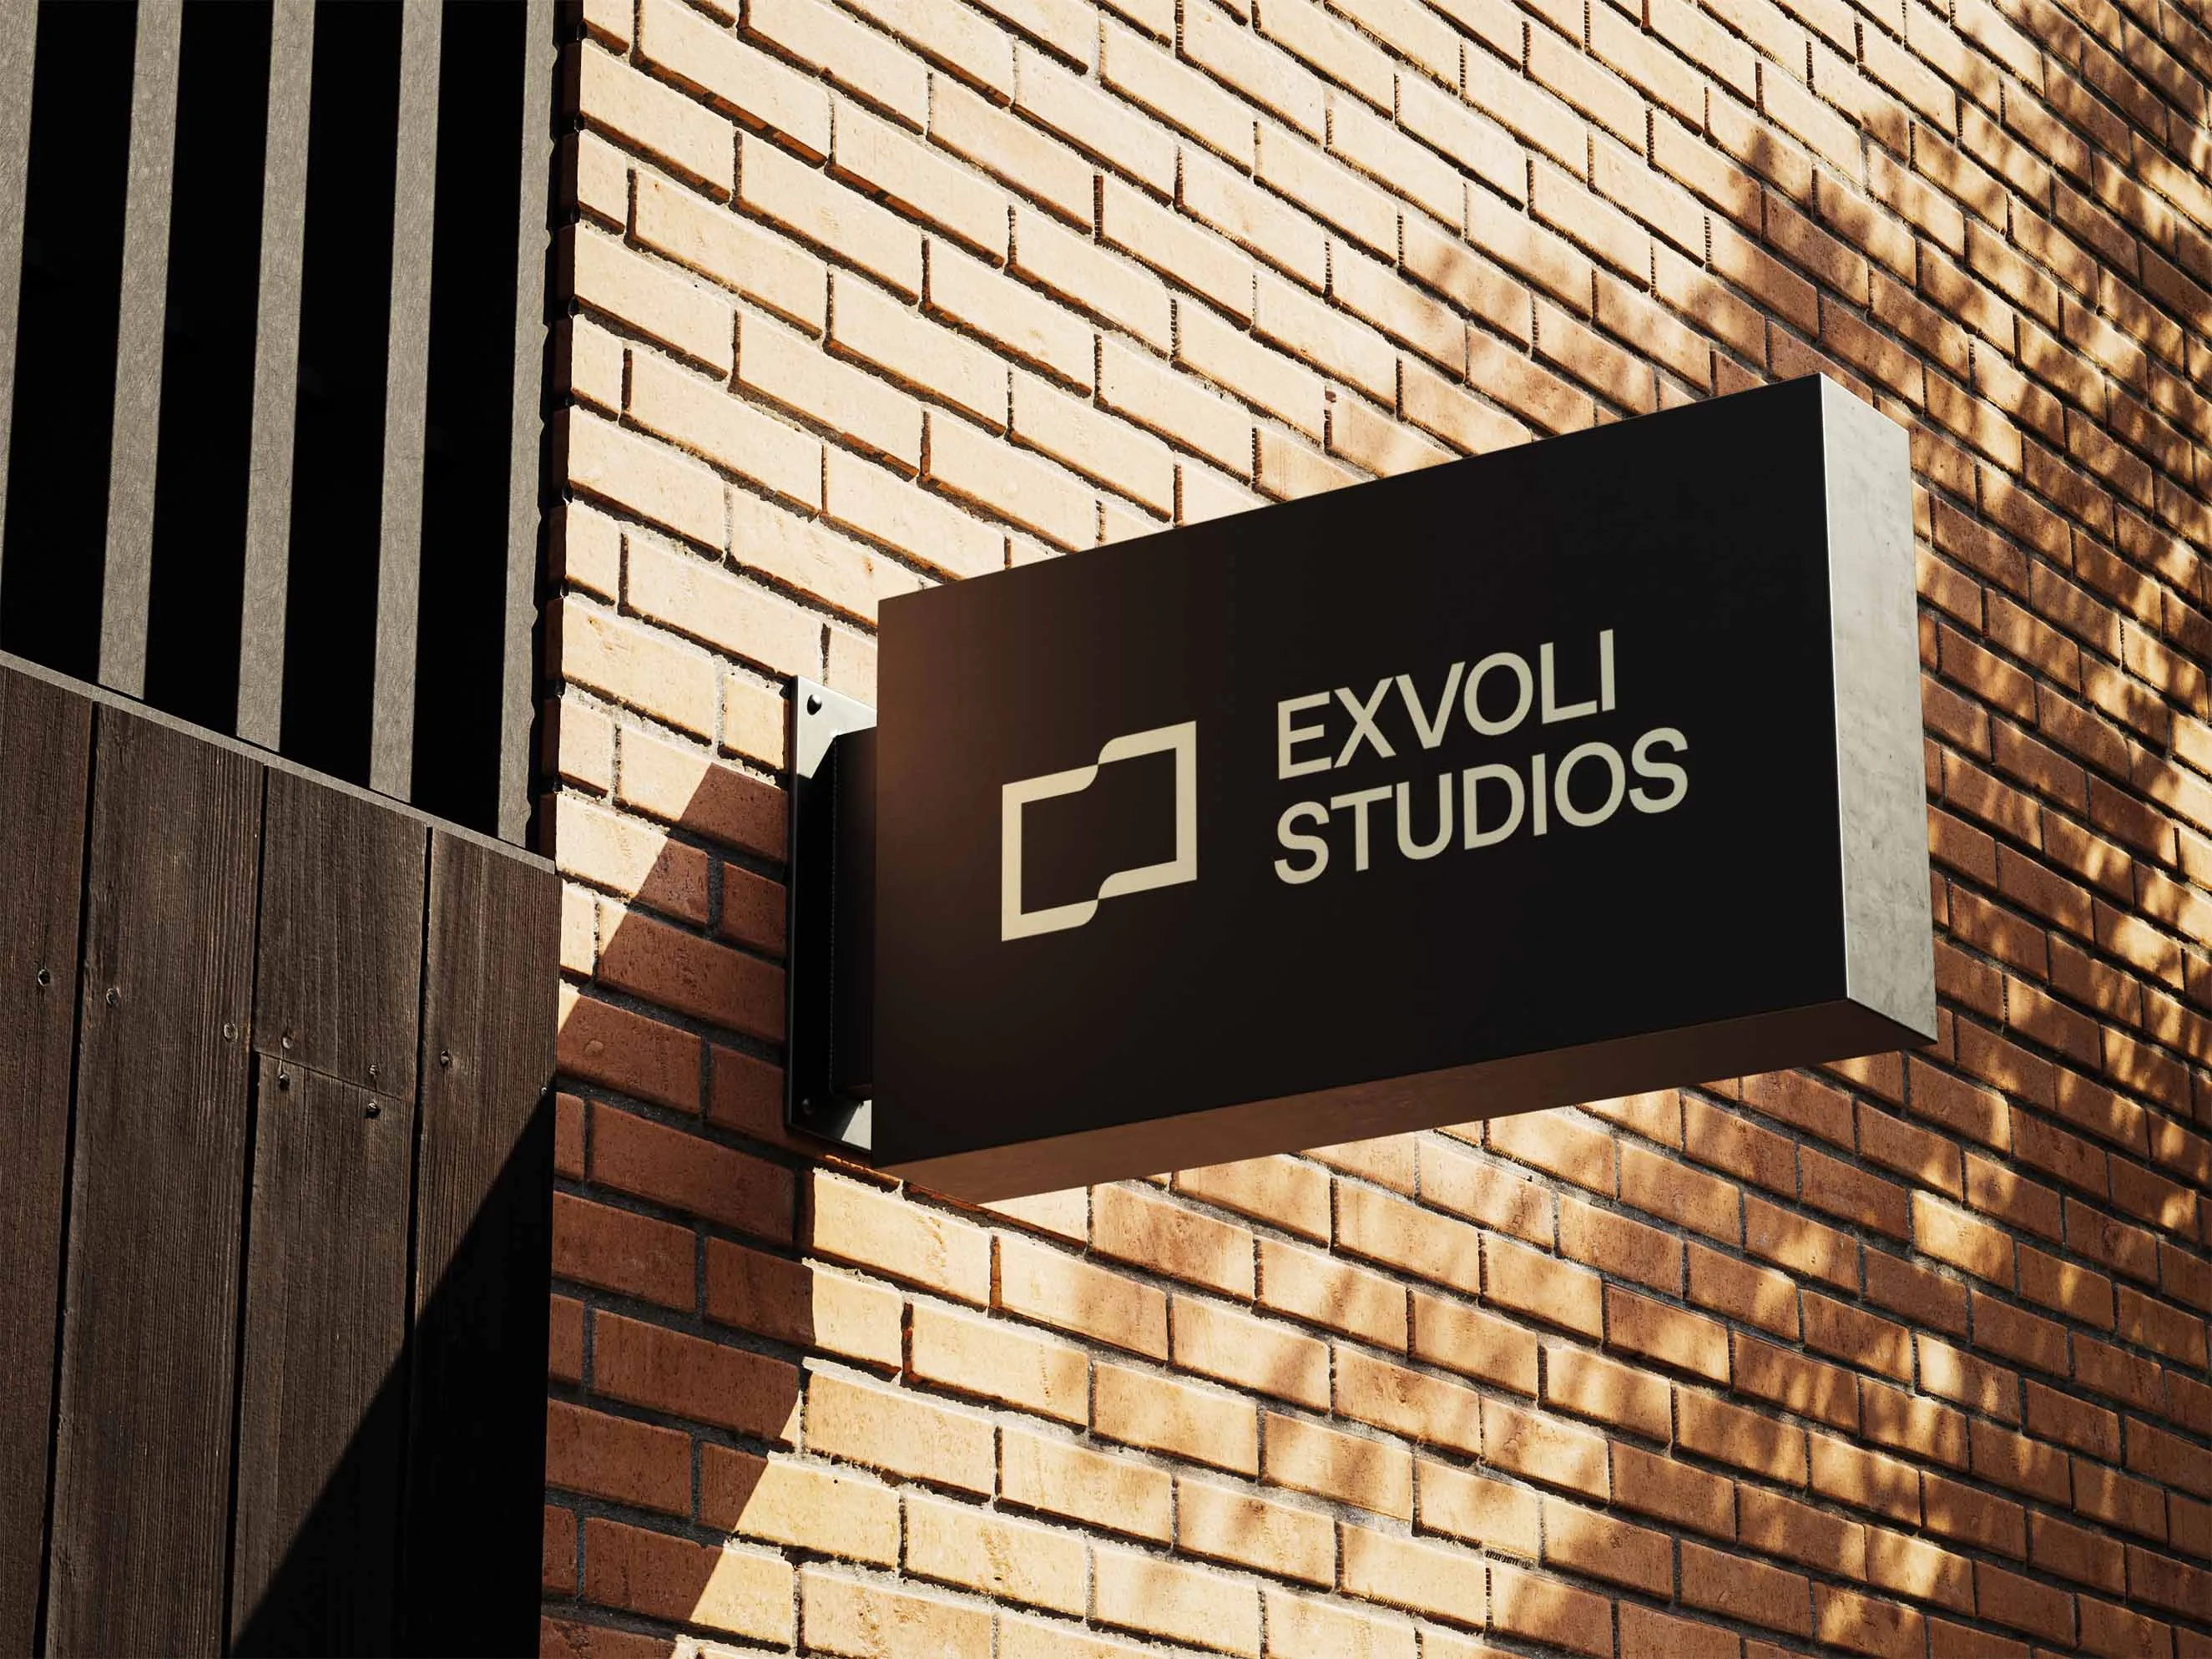 Exvoli Studios